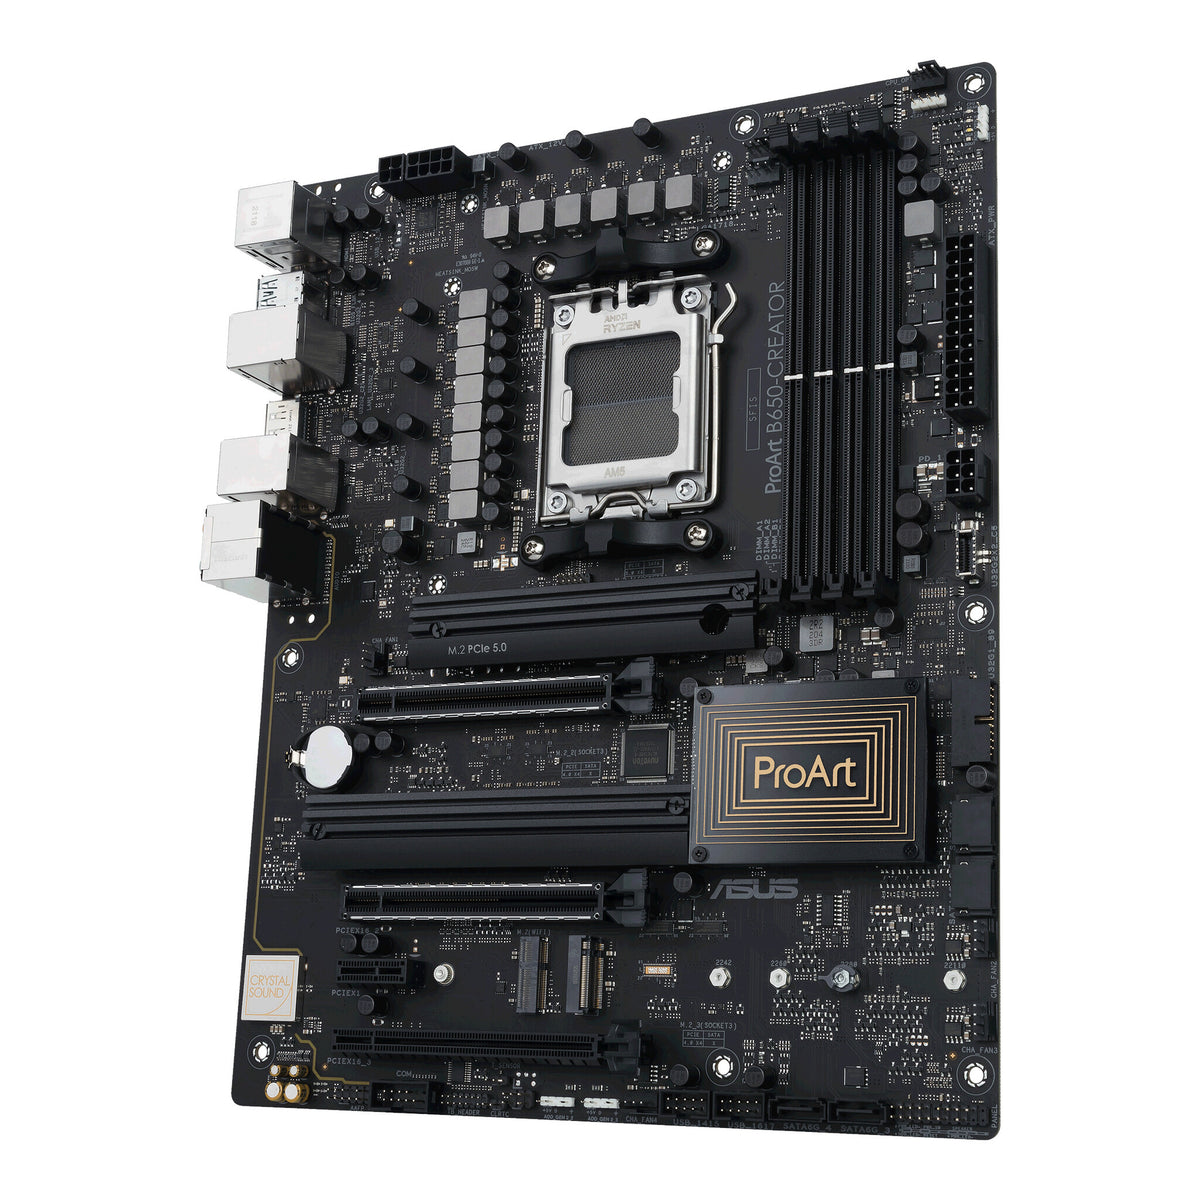 ASUS PROART B650-CREATOR ATX motherboard - AMD B650 Socket AM5